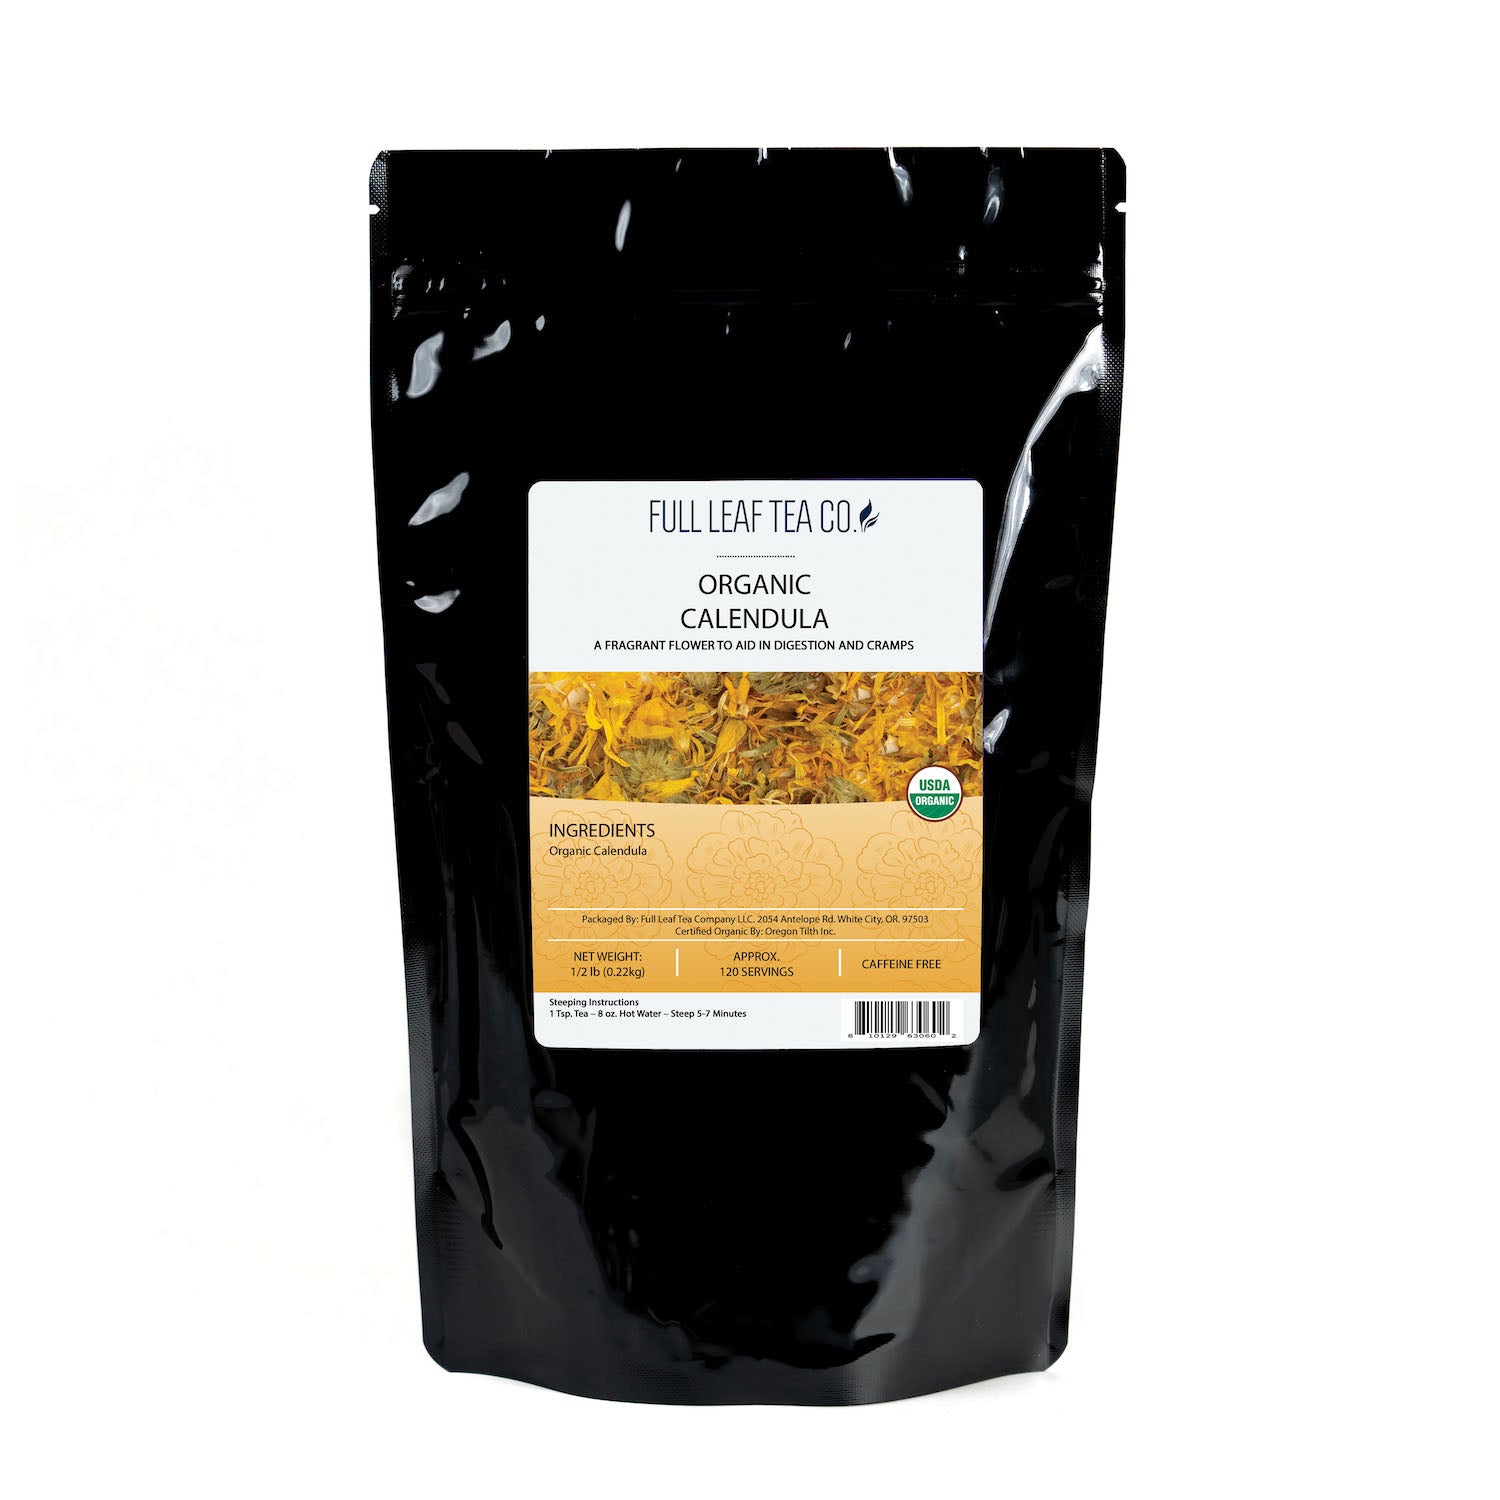 Popular High Quality Detox Skin Care Chinese Herbal Tea Natural Organic Dried  Calendula Flowers - China Chamomile, Gong Ju Chrysanthemum